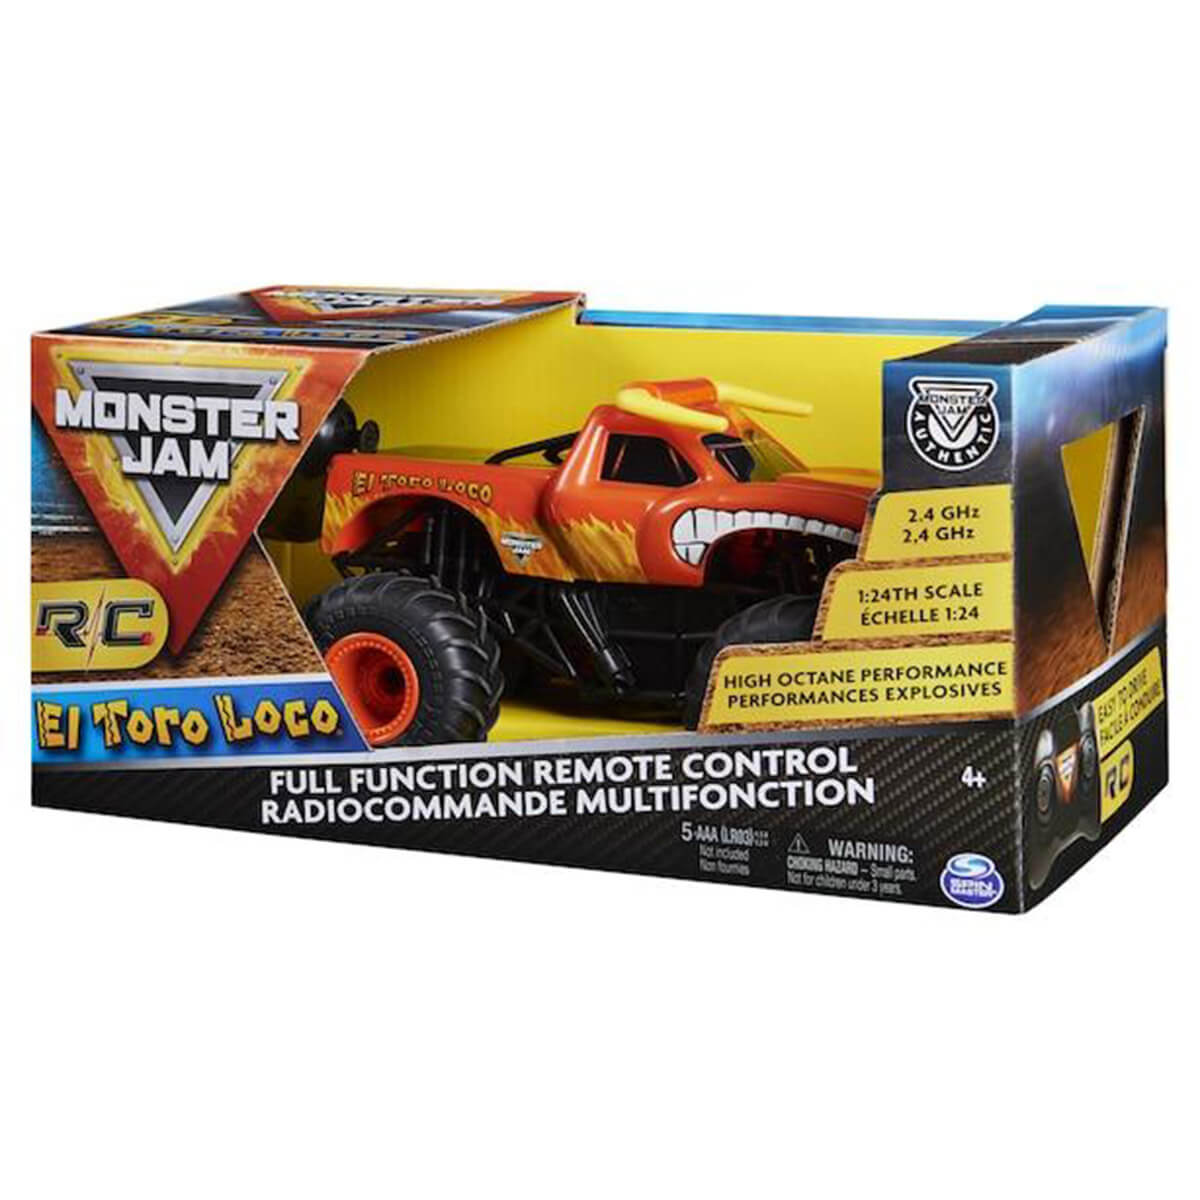 Monster Jam Full Function Remote Control El Toro Loco 1:24 Scale RC Vehicle